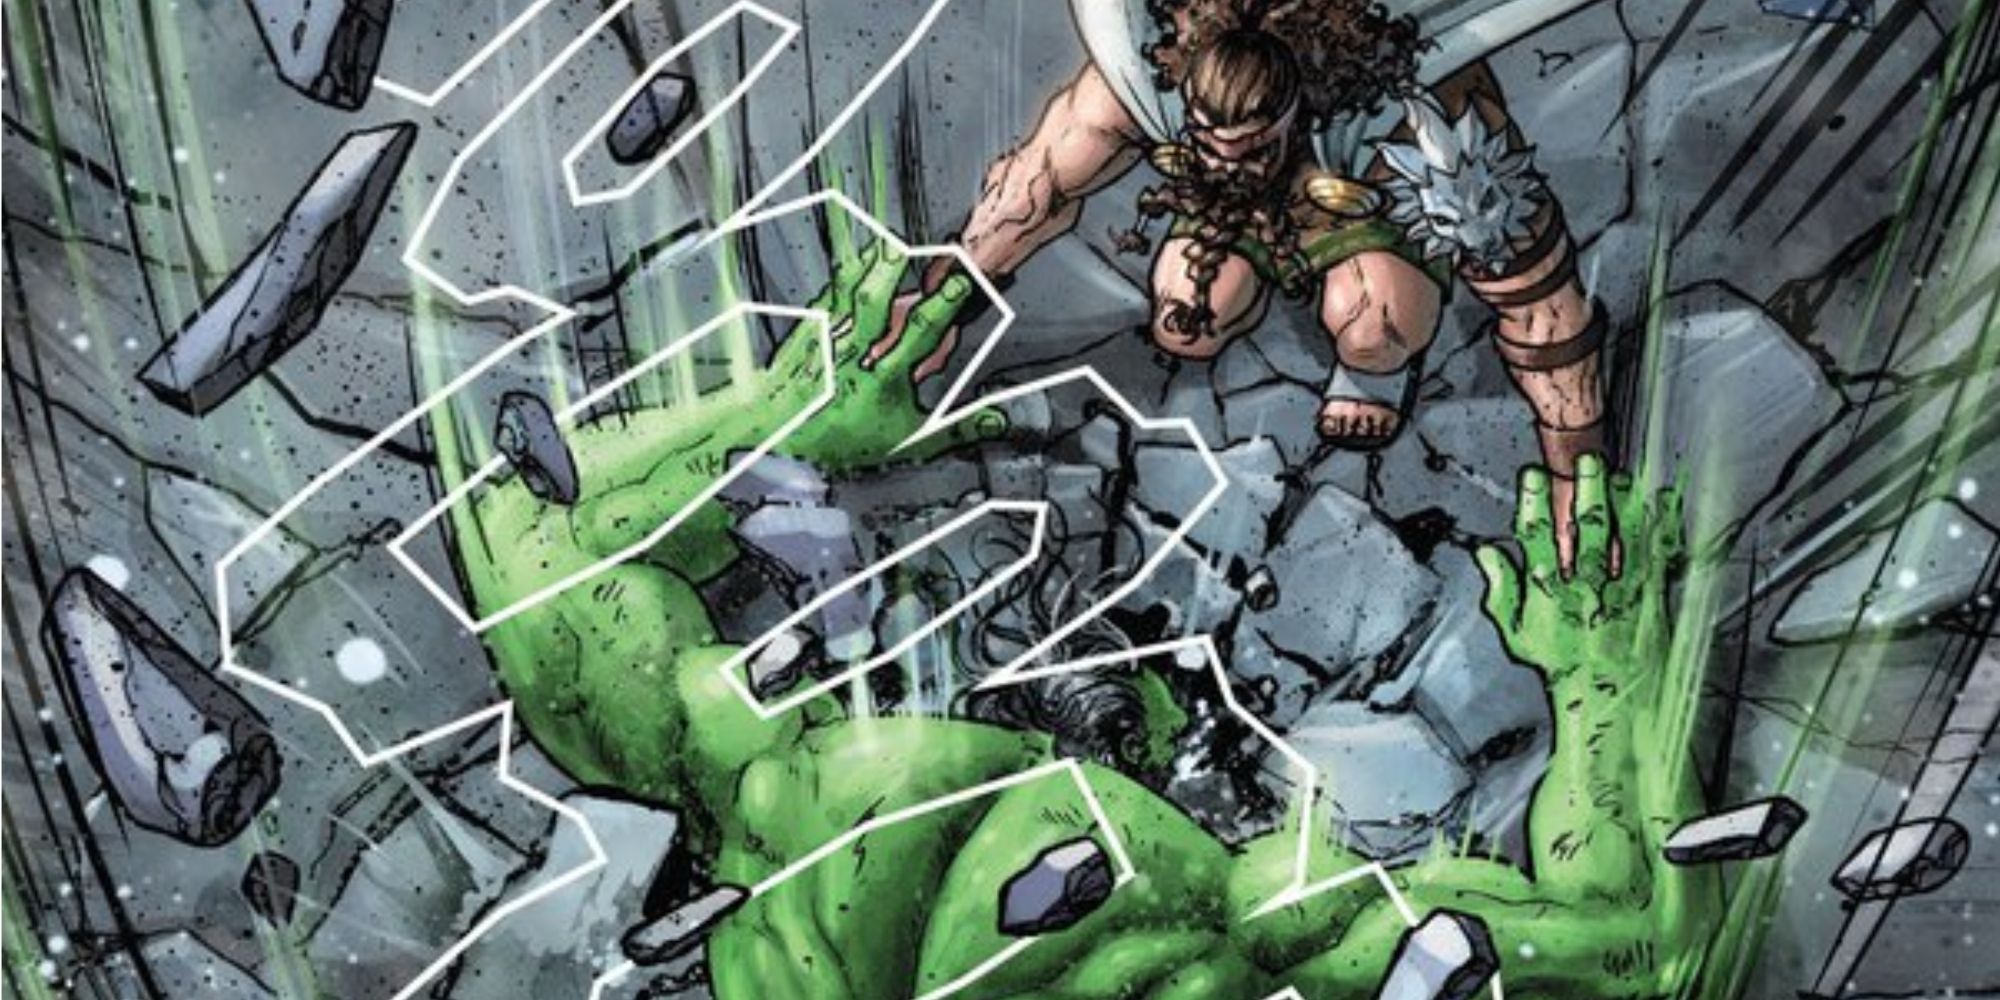 Maestro Hercules slams the Hulk into the ground in Marvel Comics.